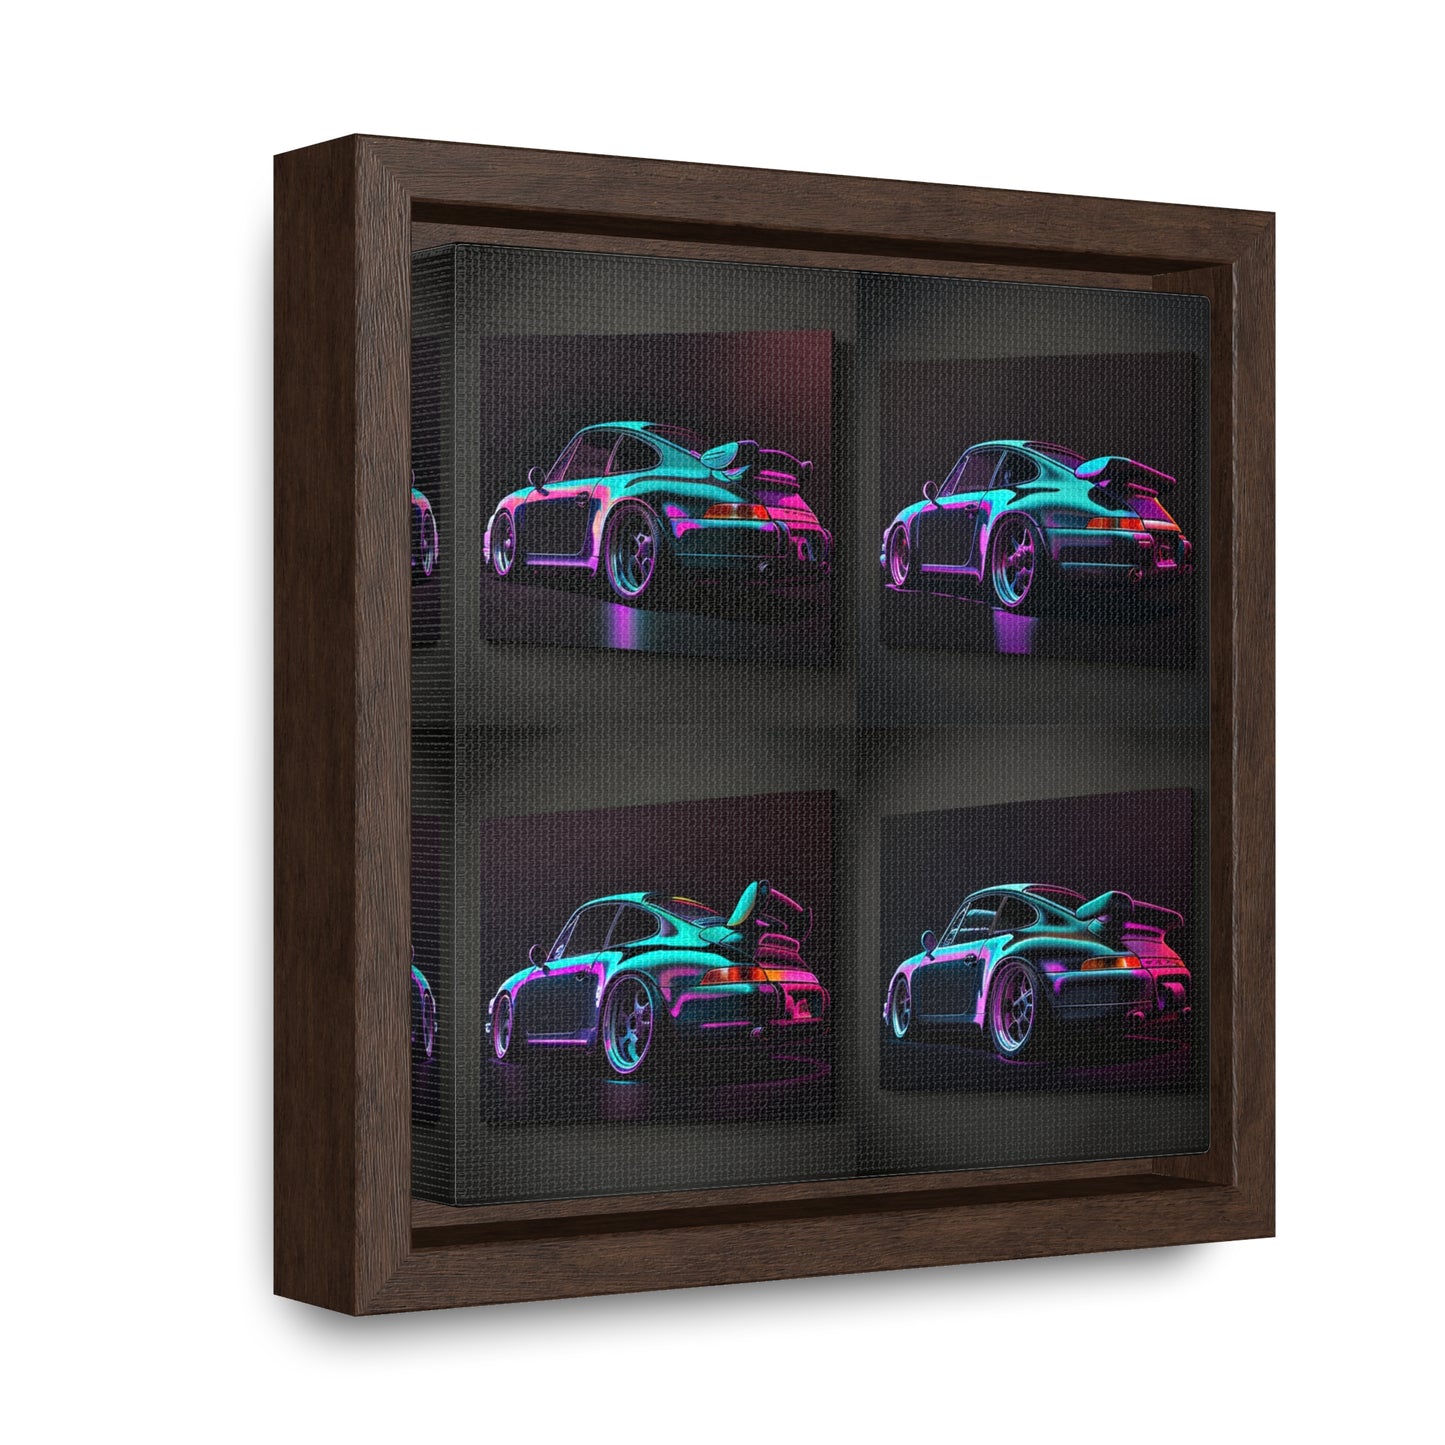 Gallery Canvas Wraps, Square Frame Porsche Purple 5